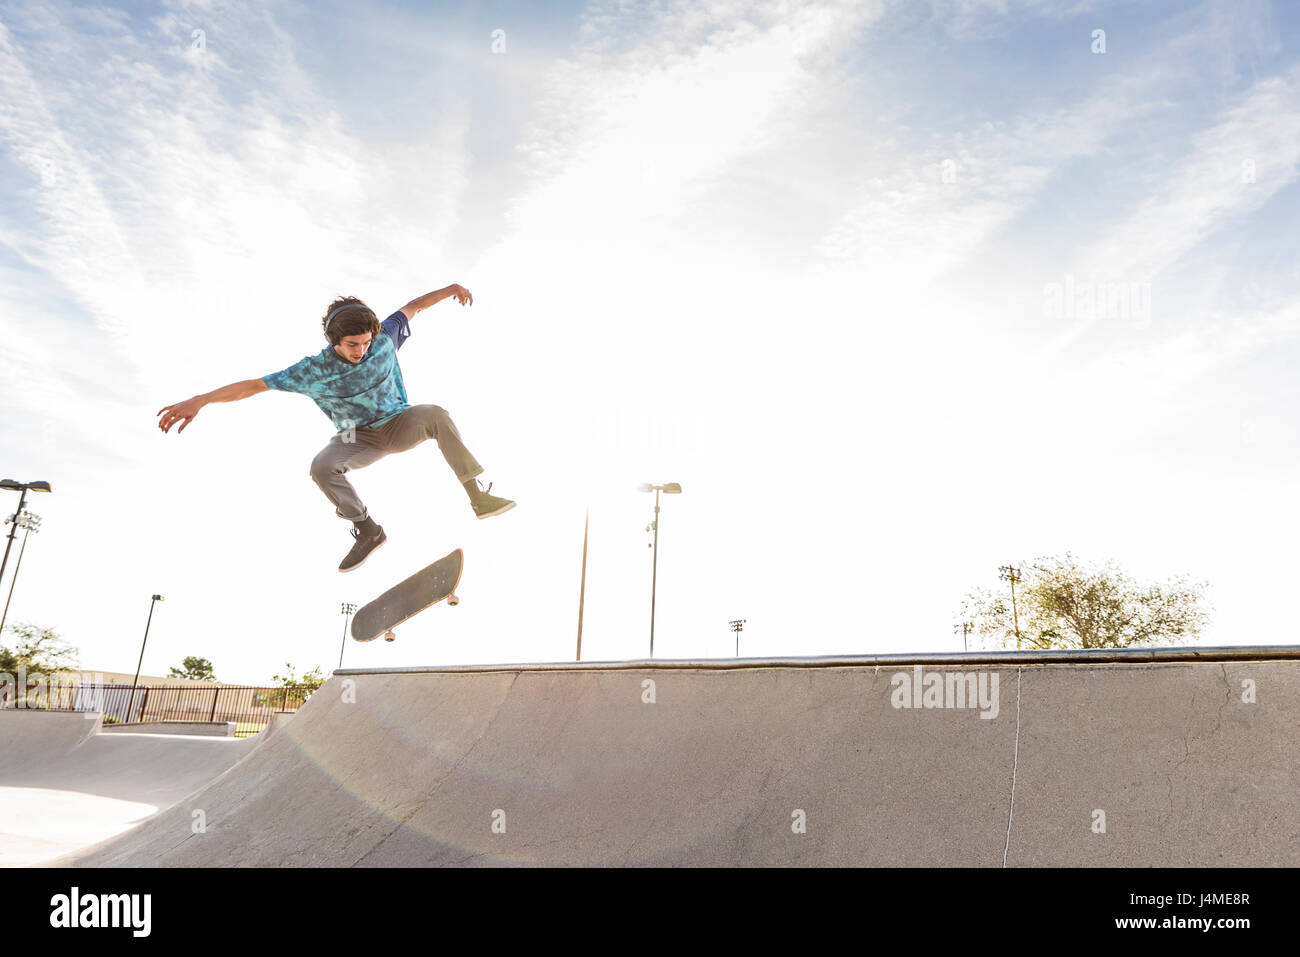 Hispanic man performing mid-air trick on skateboard Stock Photo